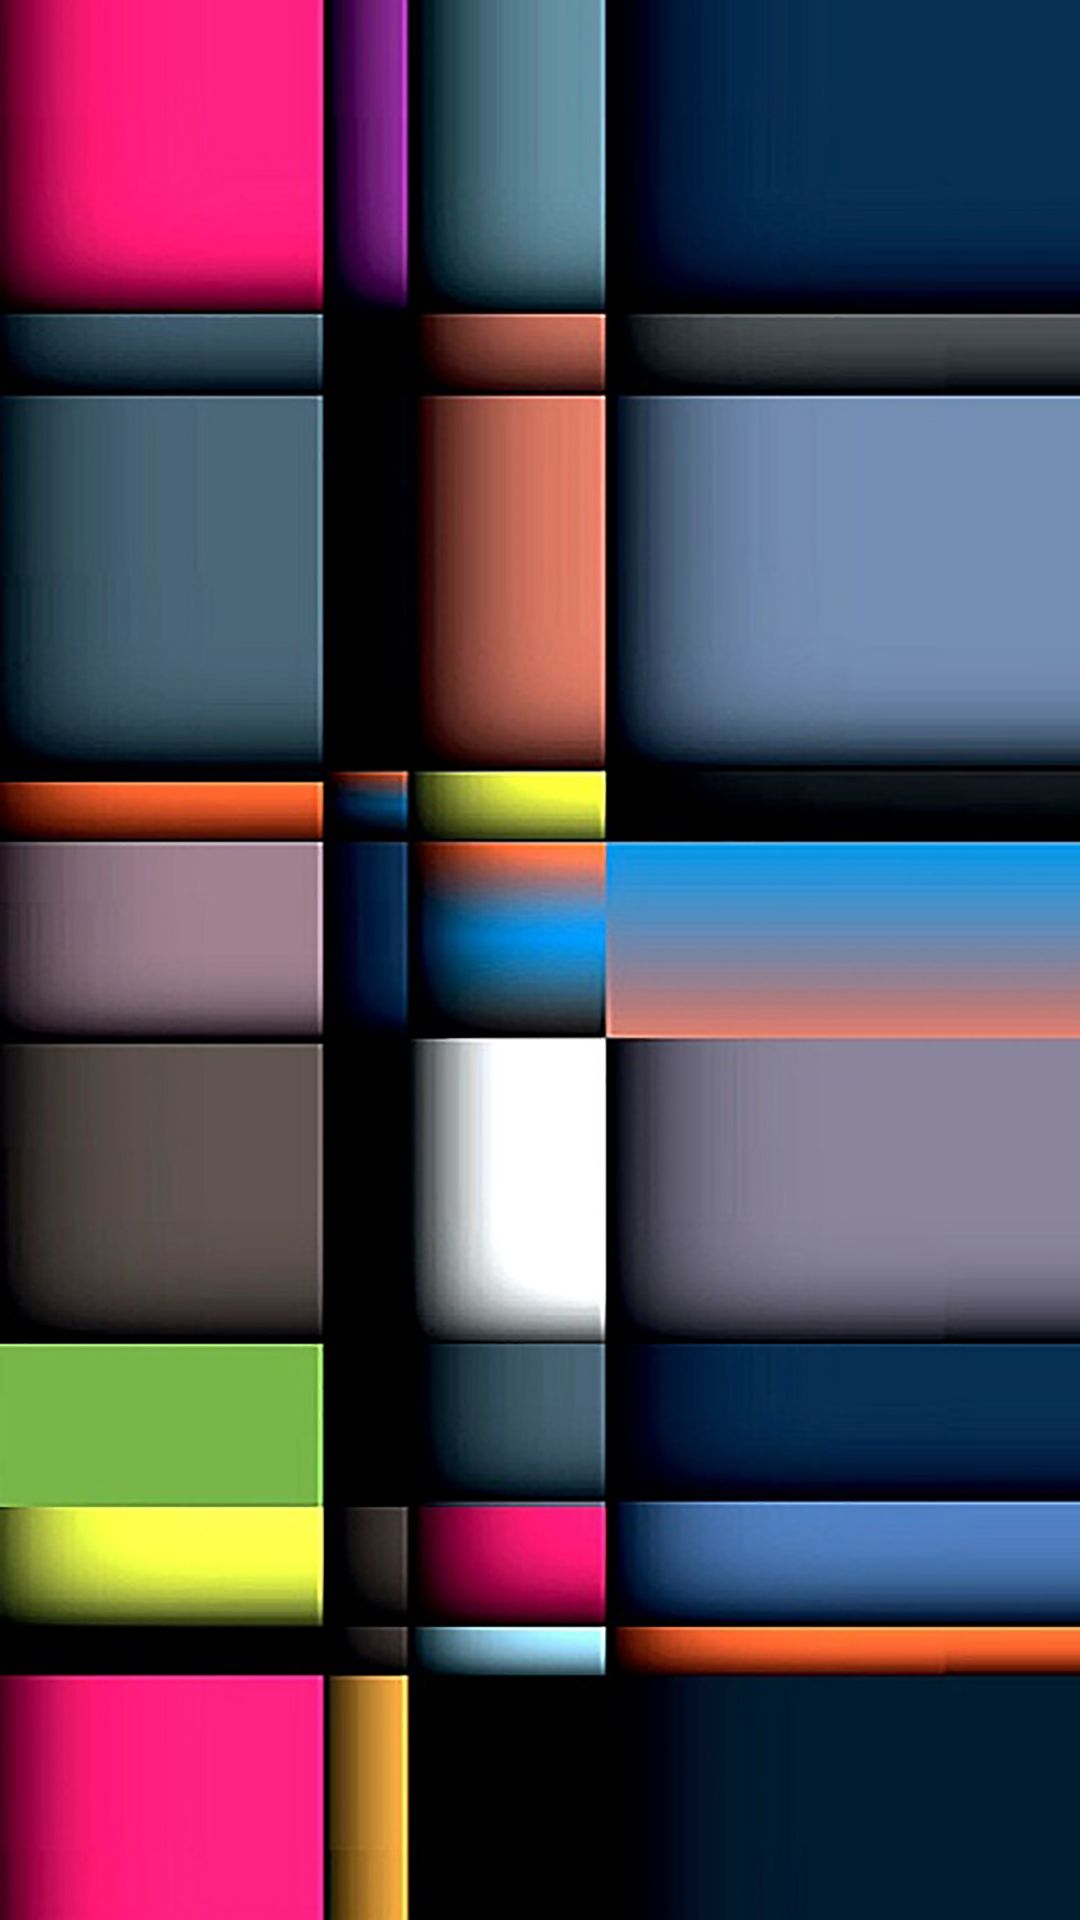 Geometric Colorful Squares Wallpaper. Phone wallpaper design, Art wallpaper iphone, iPhone wallpaper green